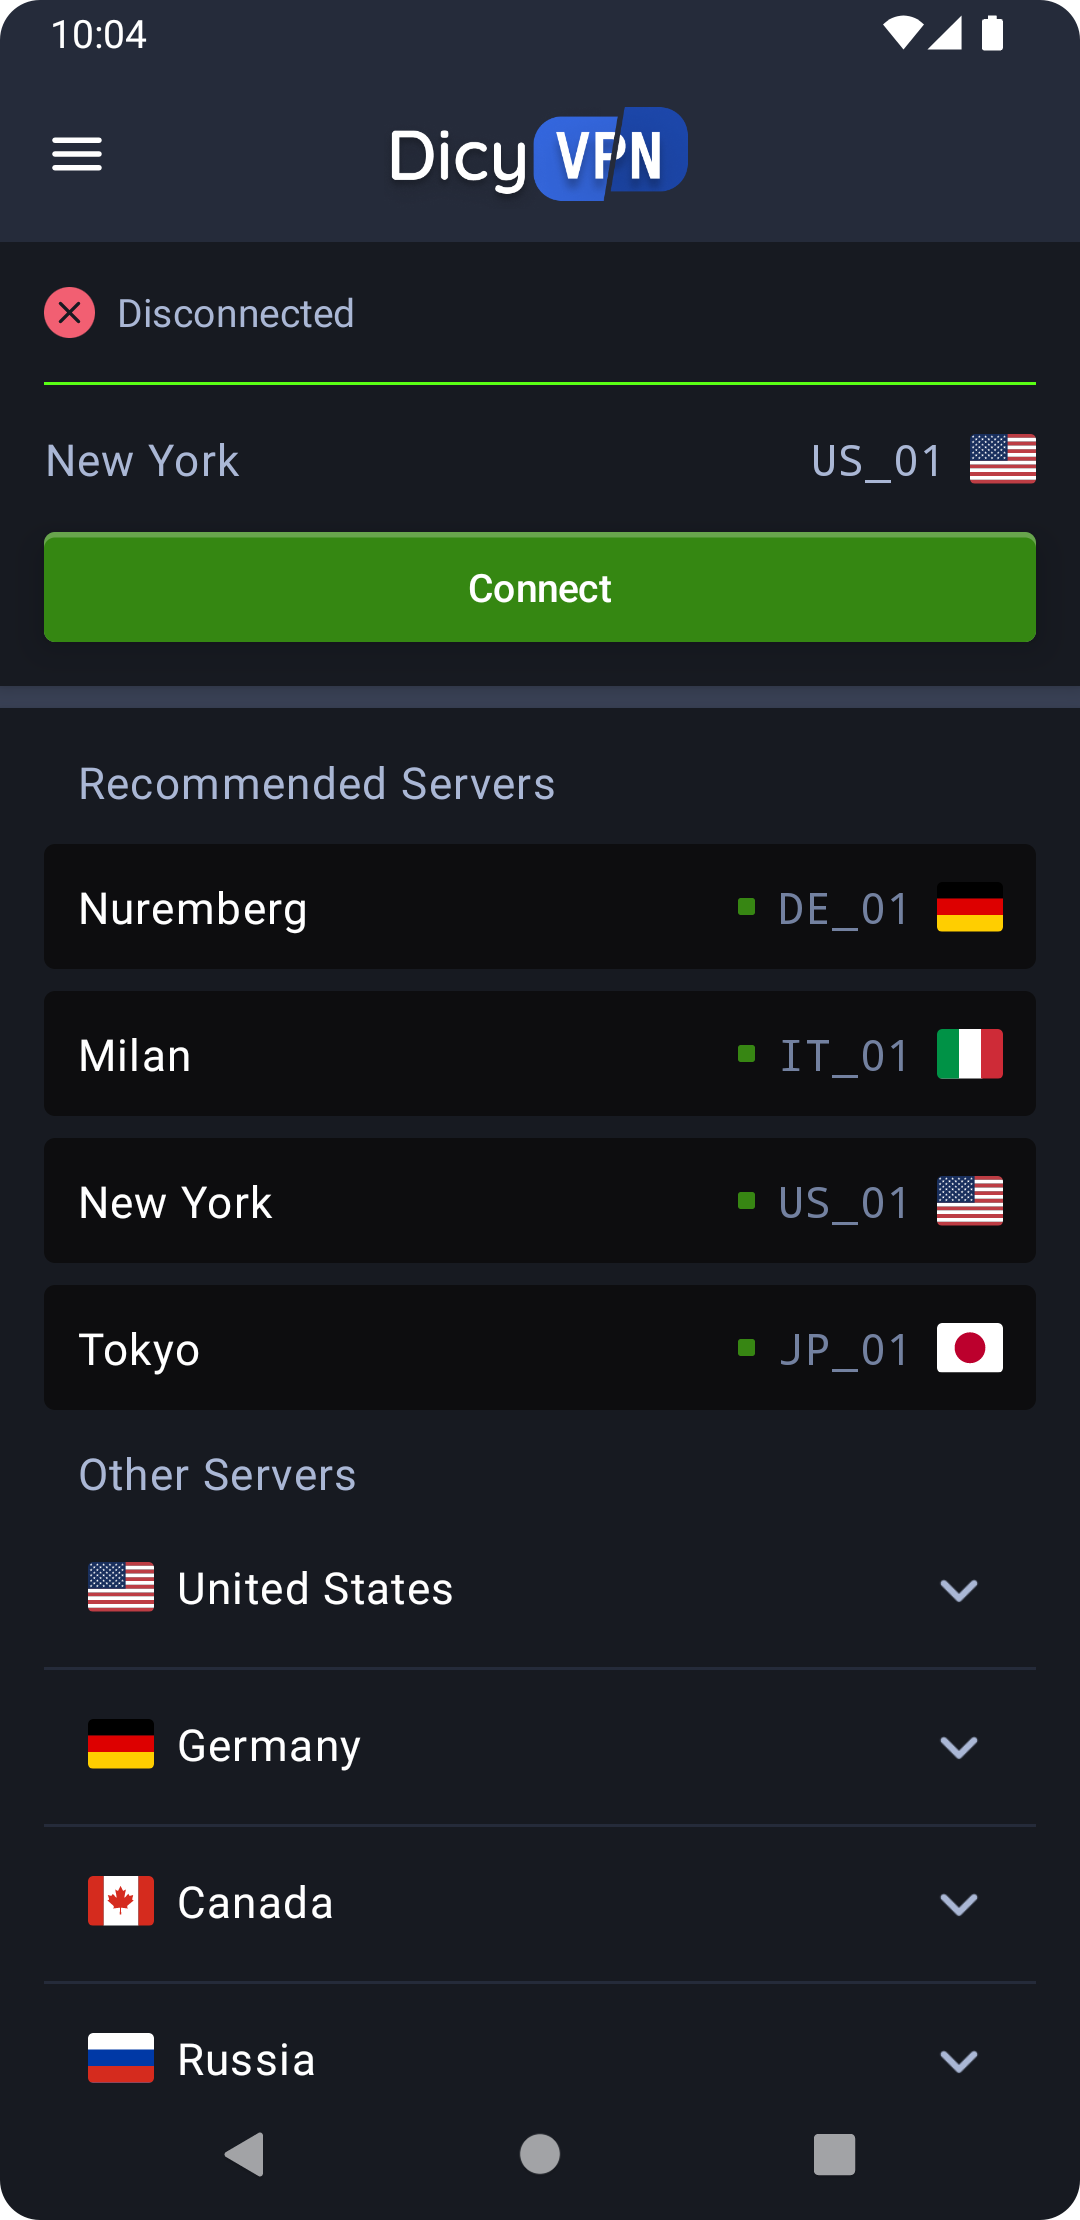 DicyVPN Android app screenshot